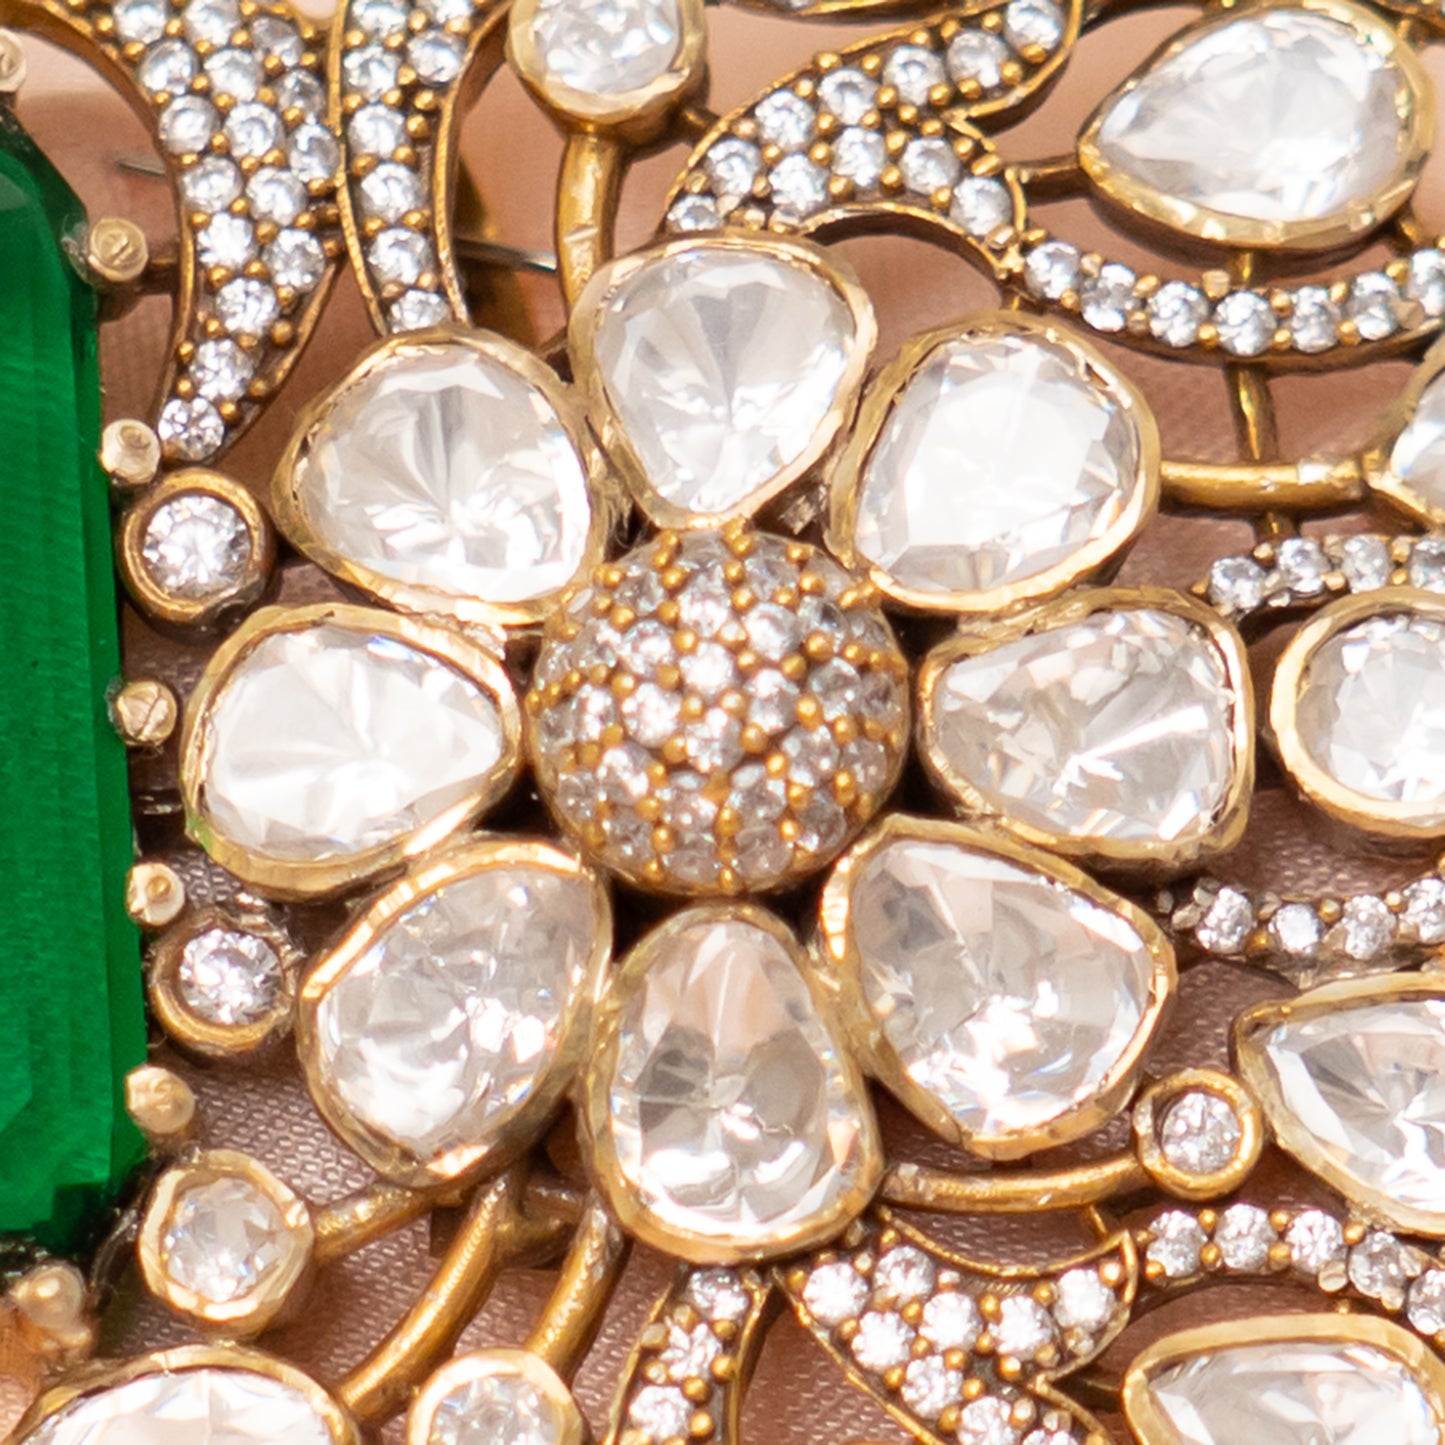 Adhiraa silver pendant, 92.5 silver gold-plated pendant featuring emerald moissanite and cz stones, designer pendant